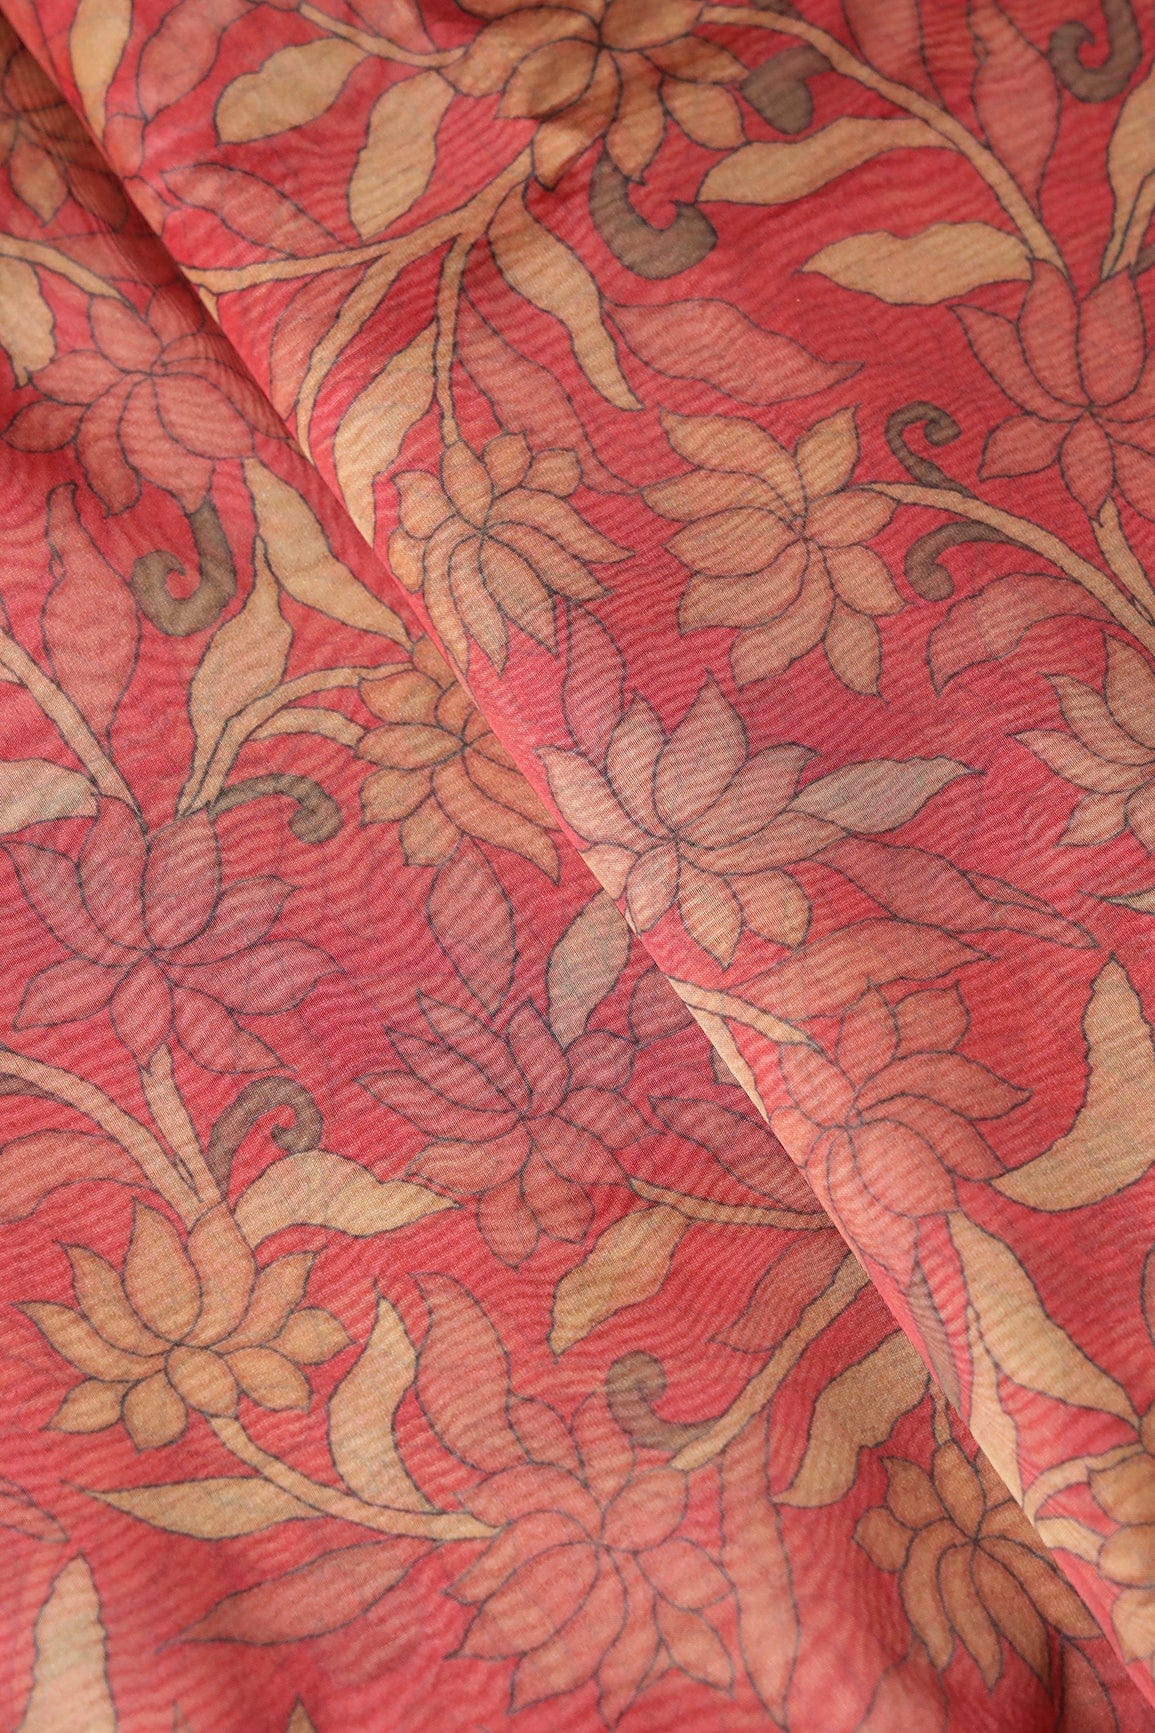 doeraa Prints Red And Beige Floral Digital Print On Maroon Organza Fabric